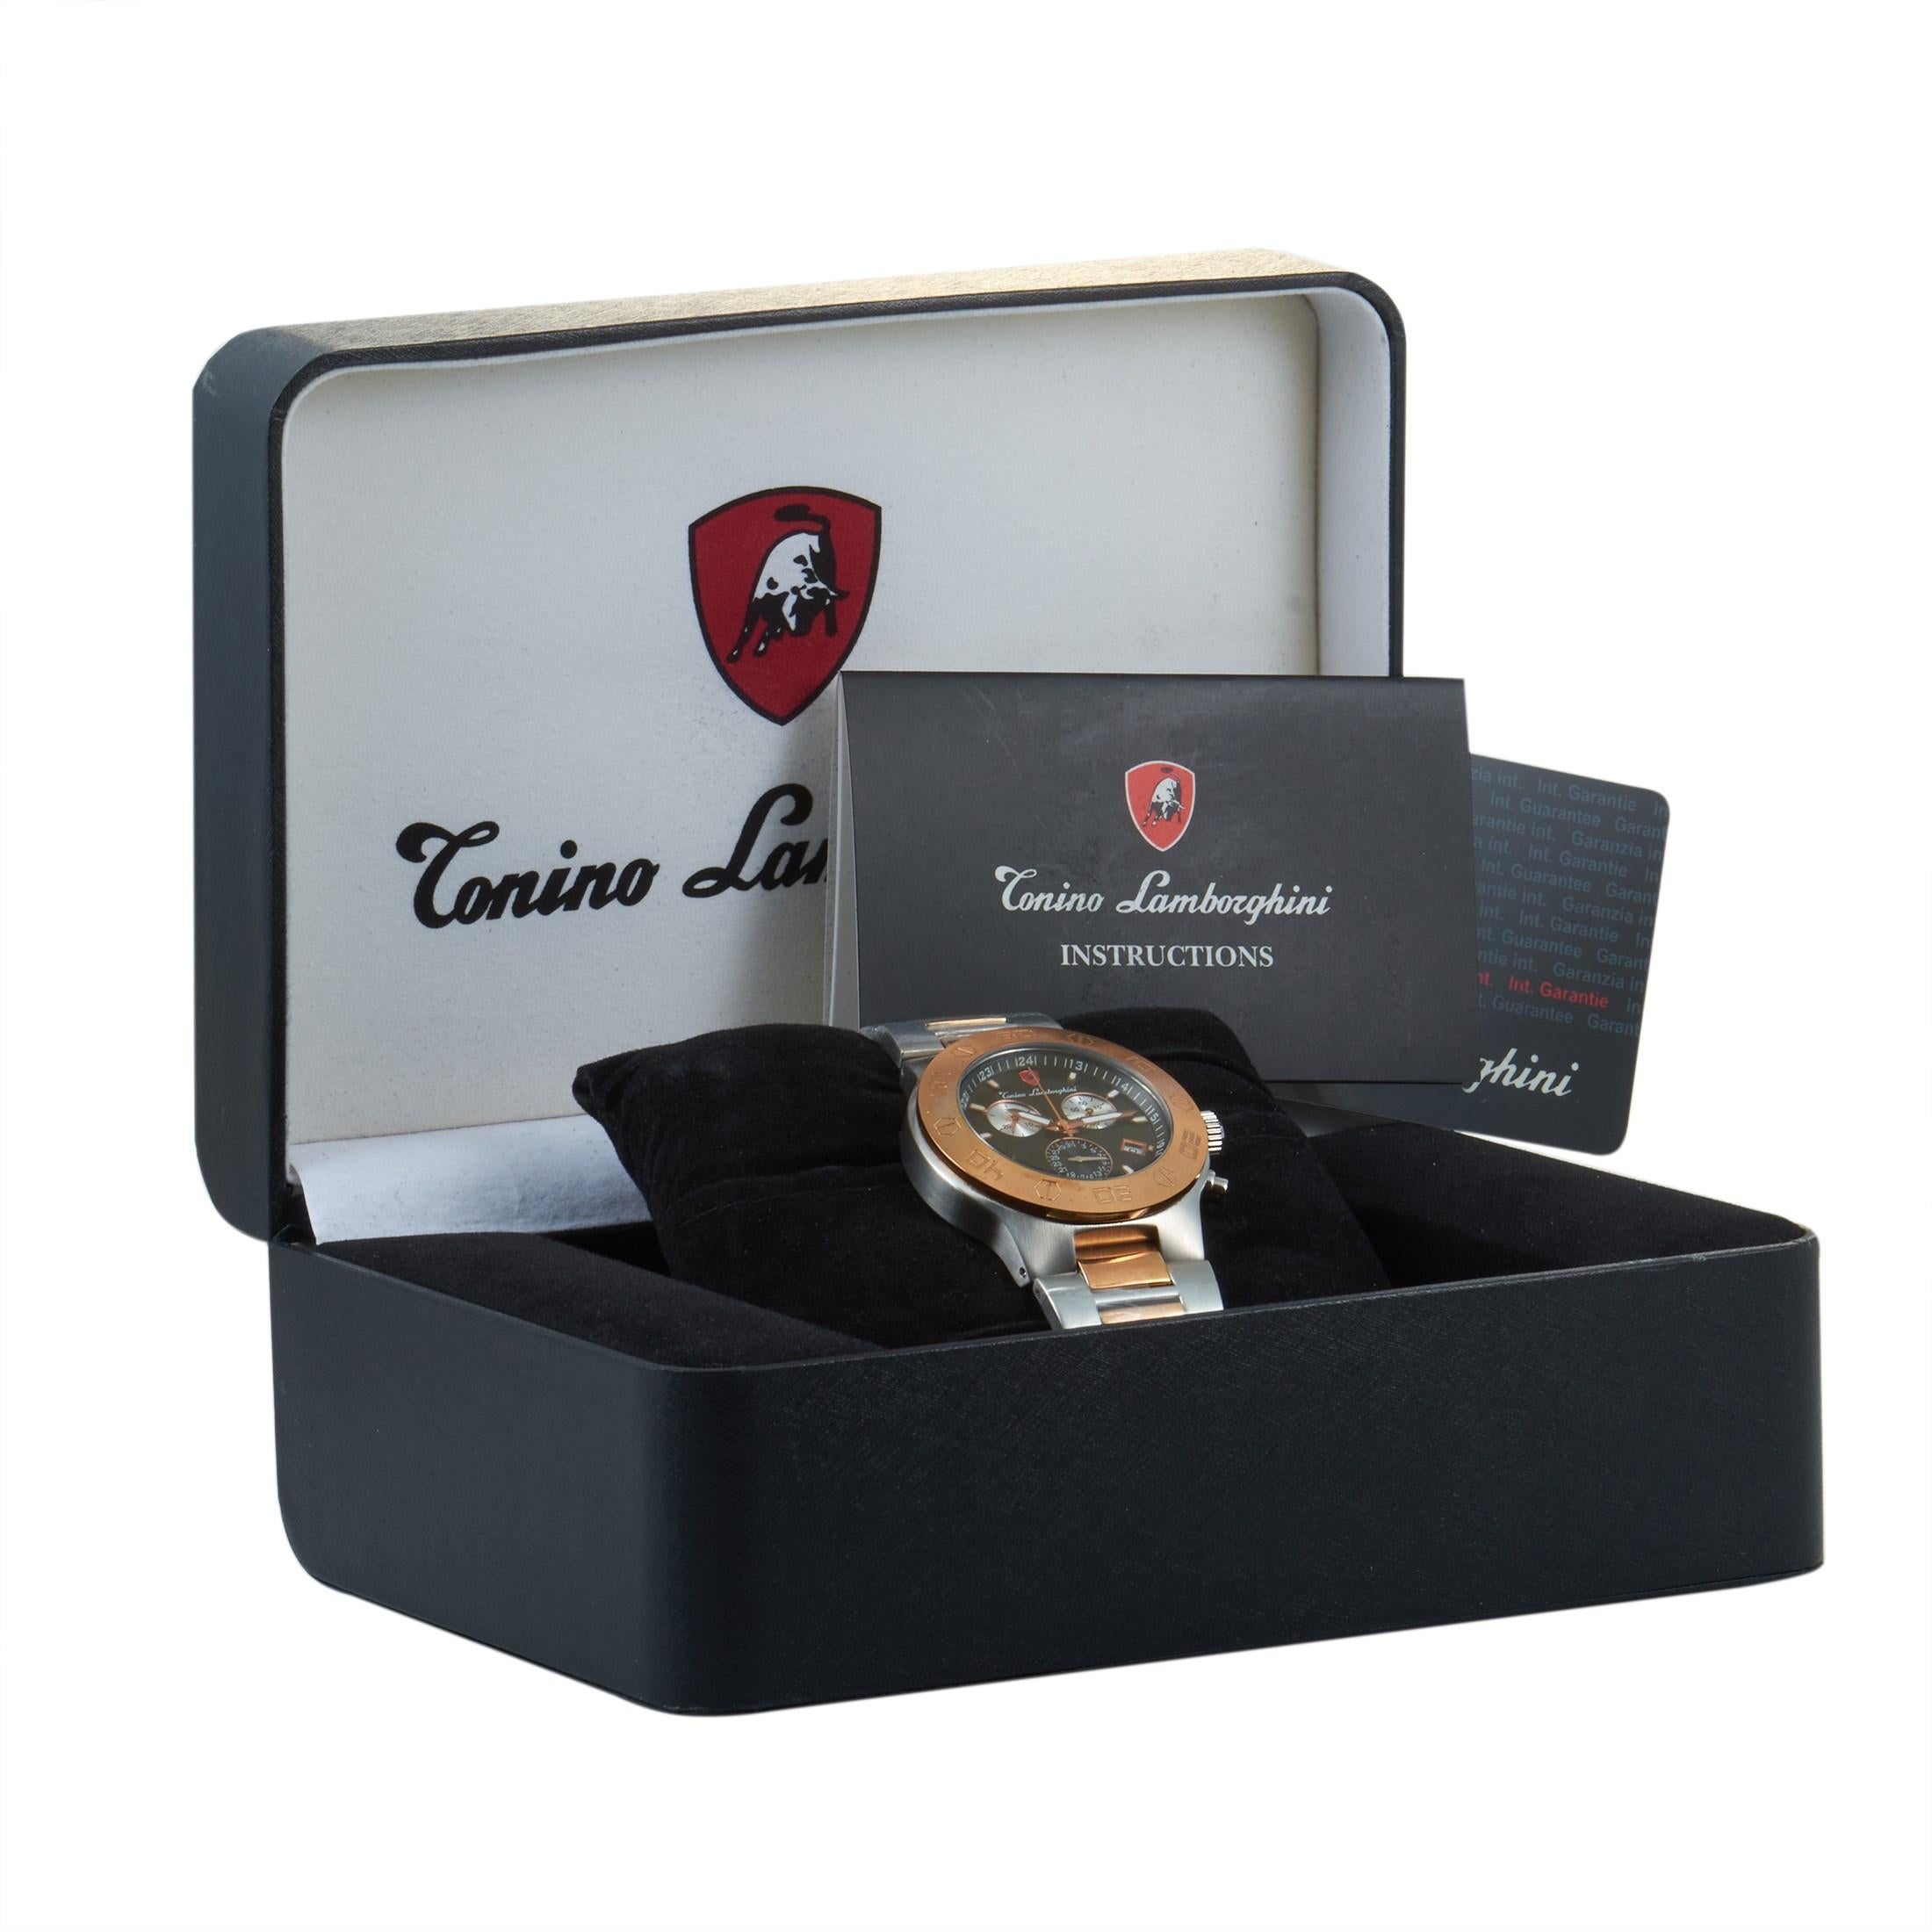 Tonino Lamborghini Chronograph Watch EN034.501 1